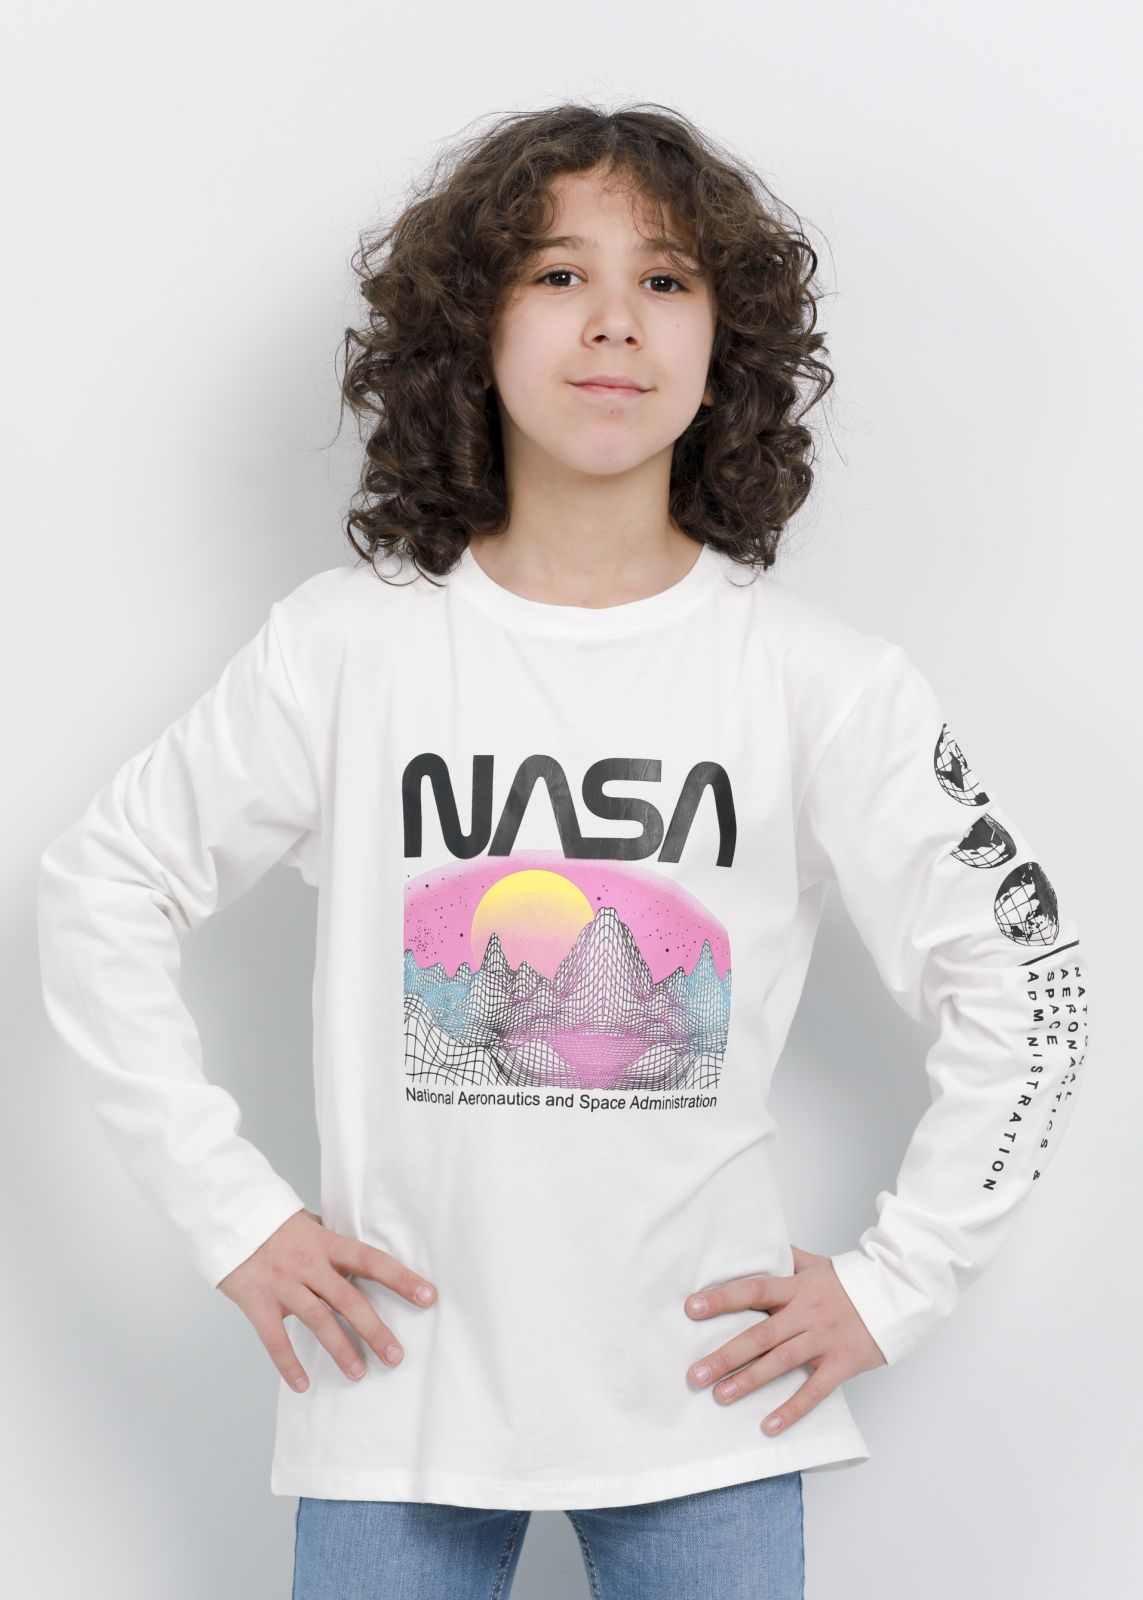 Kids Boy “Nasa” Design Printed Blouse|Kids Clothing|61223160232|متجر  لافاميليا الالكتروني